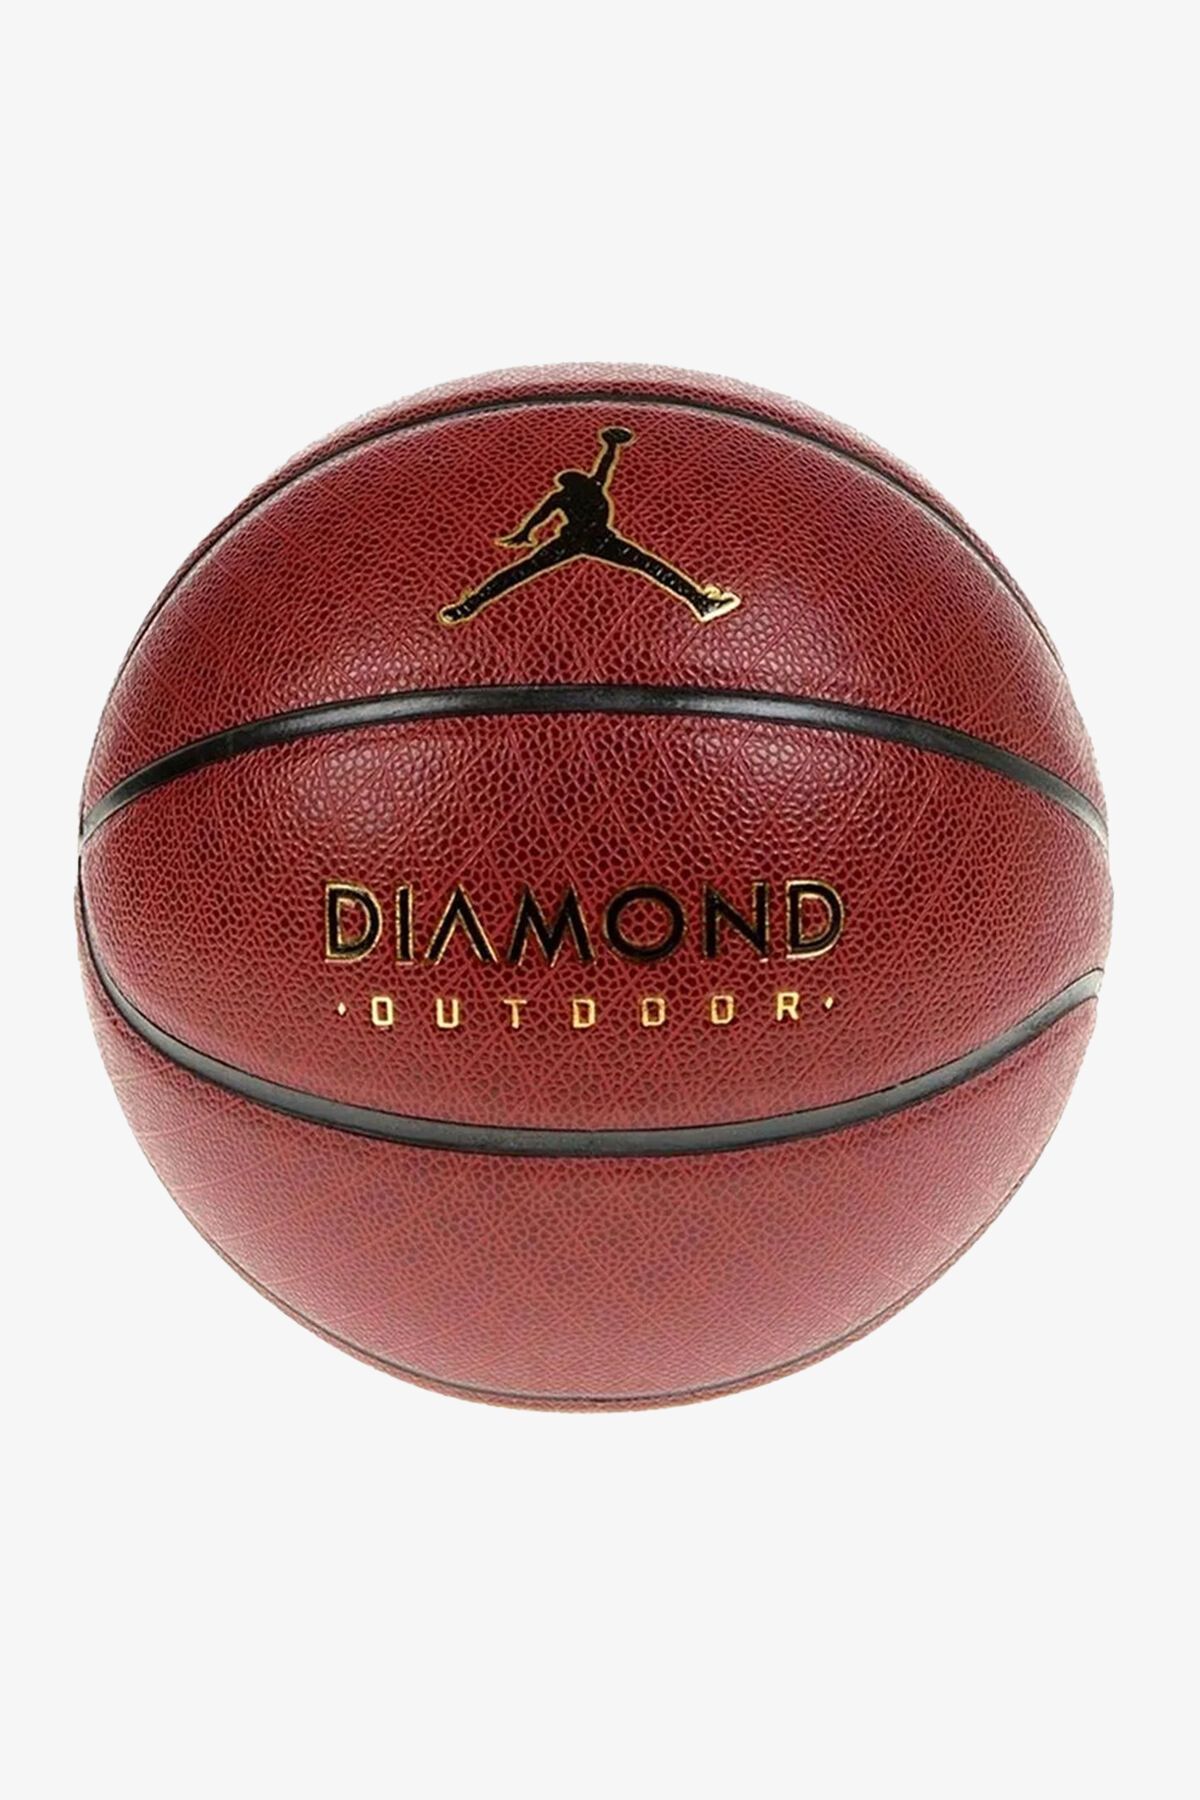 Nike Jordan Diamond Outdoor 8P Turuncu Basketbol Topu J.100.8252.891.07